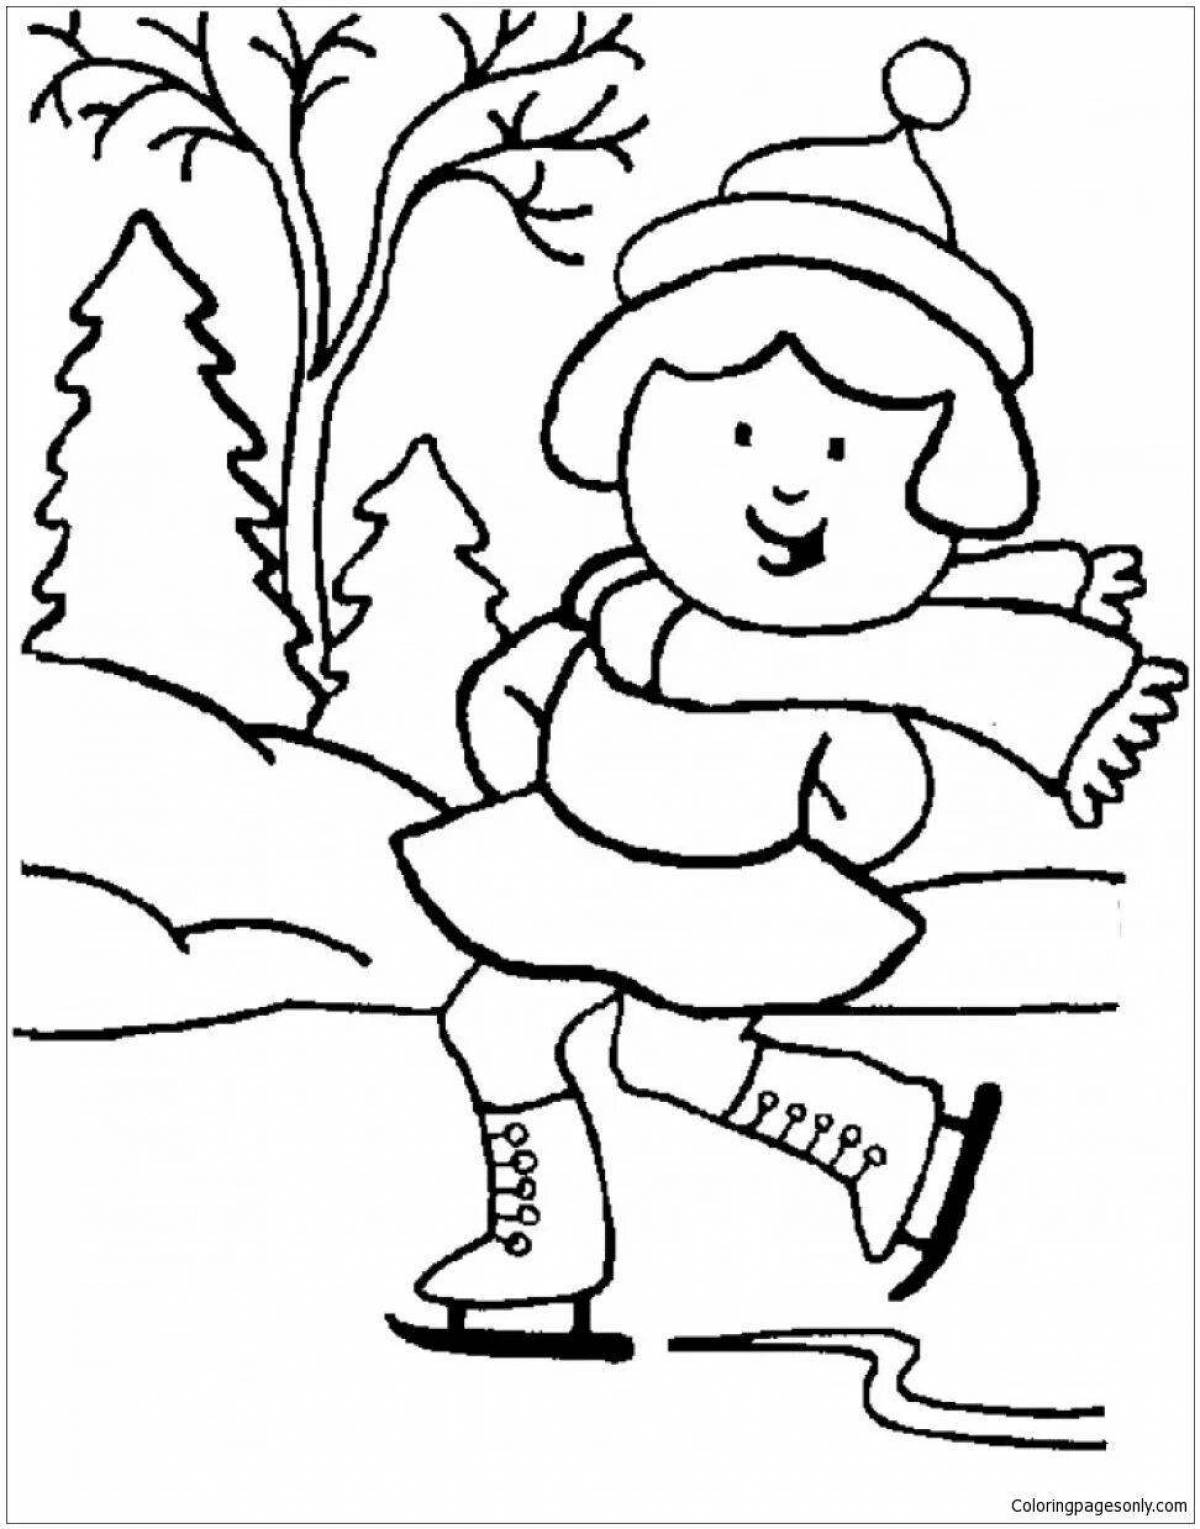 Great winter coloring book for preschoolers